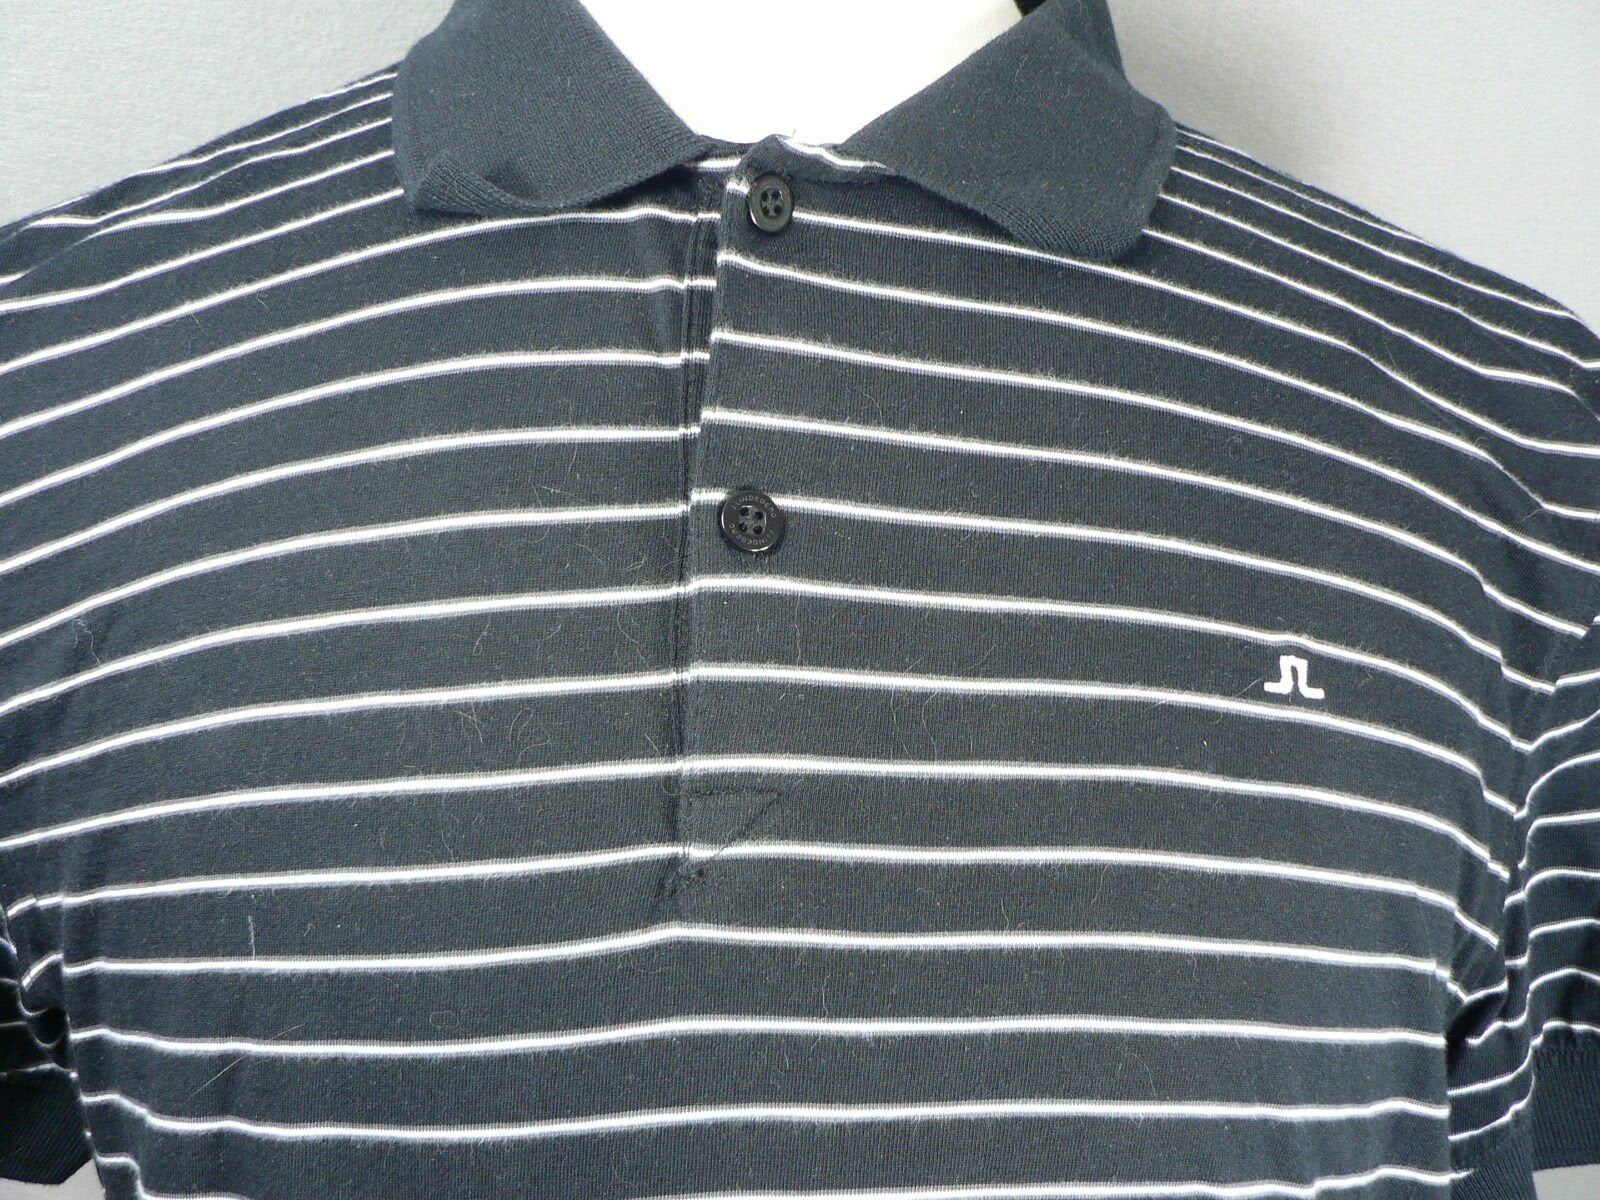 A 21st Century Lifestyle Golf Shirt Embroidered Logo Men's L 100% Cotton